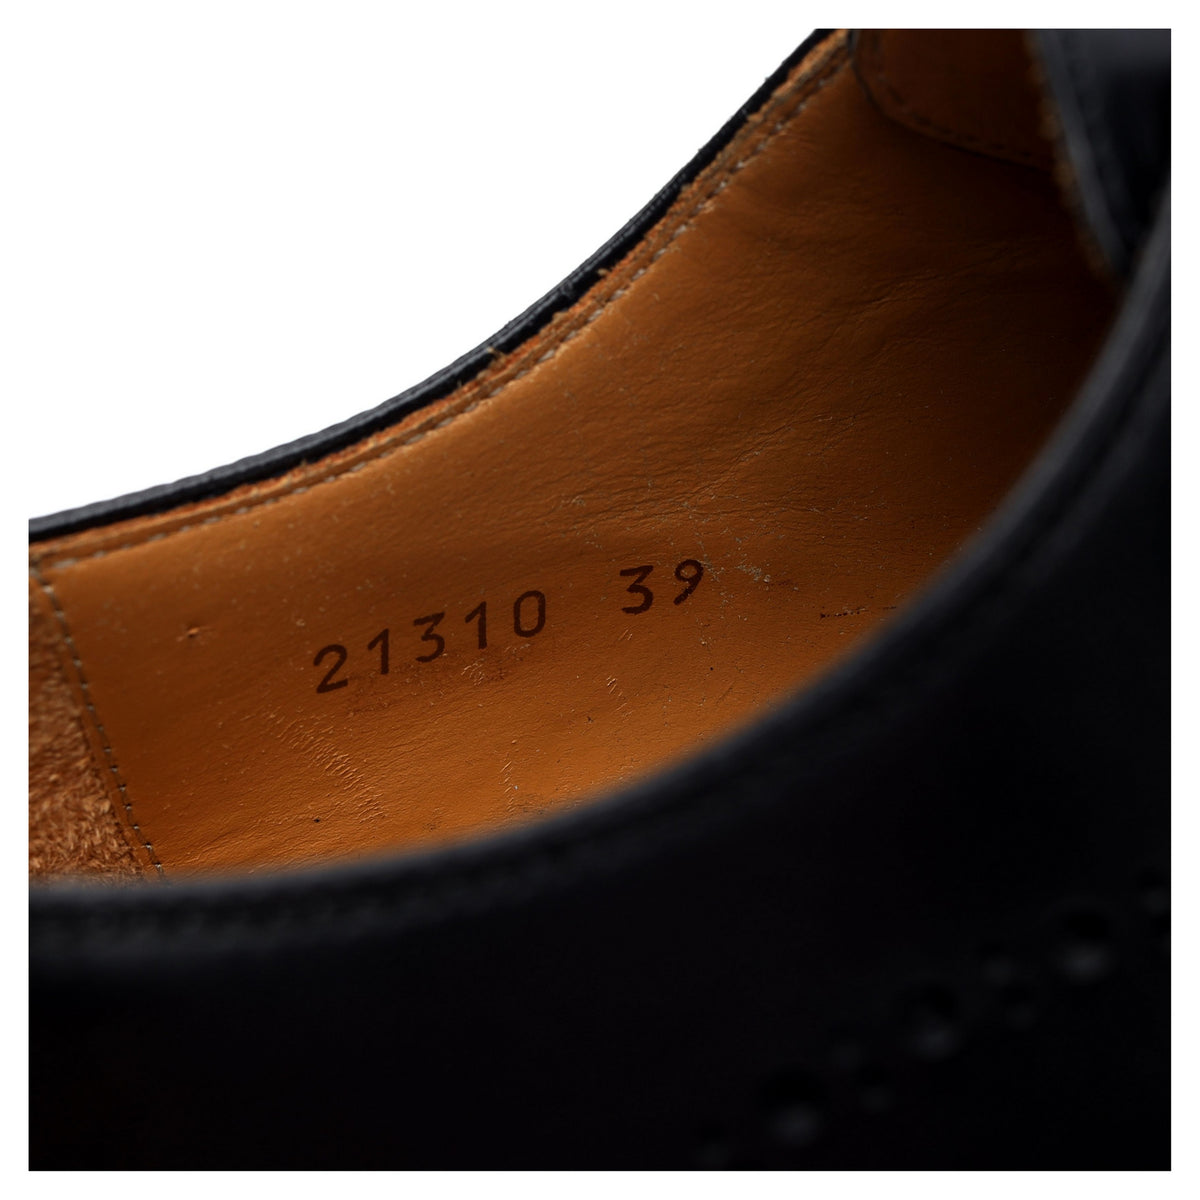 &#39;21310&#39; Black Leather Oxford Brogues UK 5 EU 39